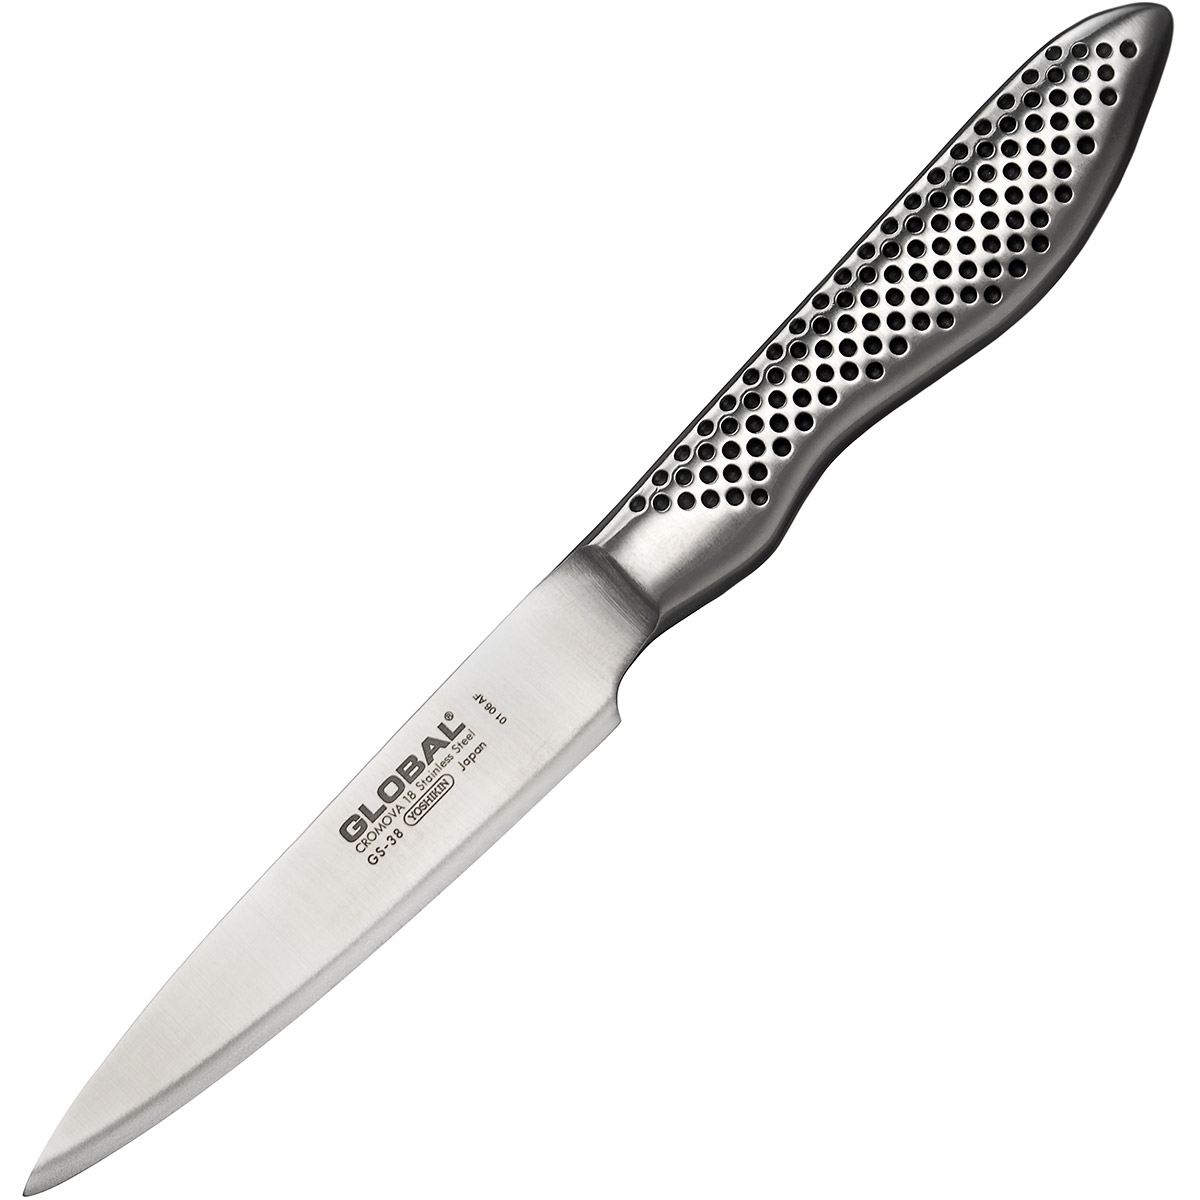 Нож 5 см лезвие. Нож для чистки овощей Tramontina. Нож для фруктов Natura Basic 9см /akn002/. Нож овощной Yamata. Нож Трамонтина 9 см.